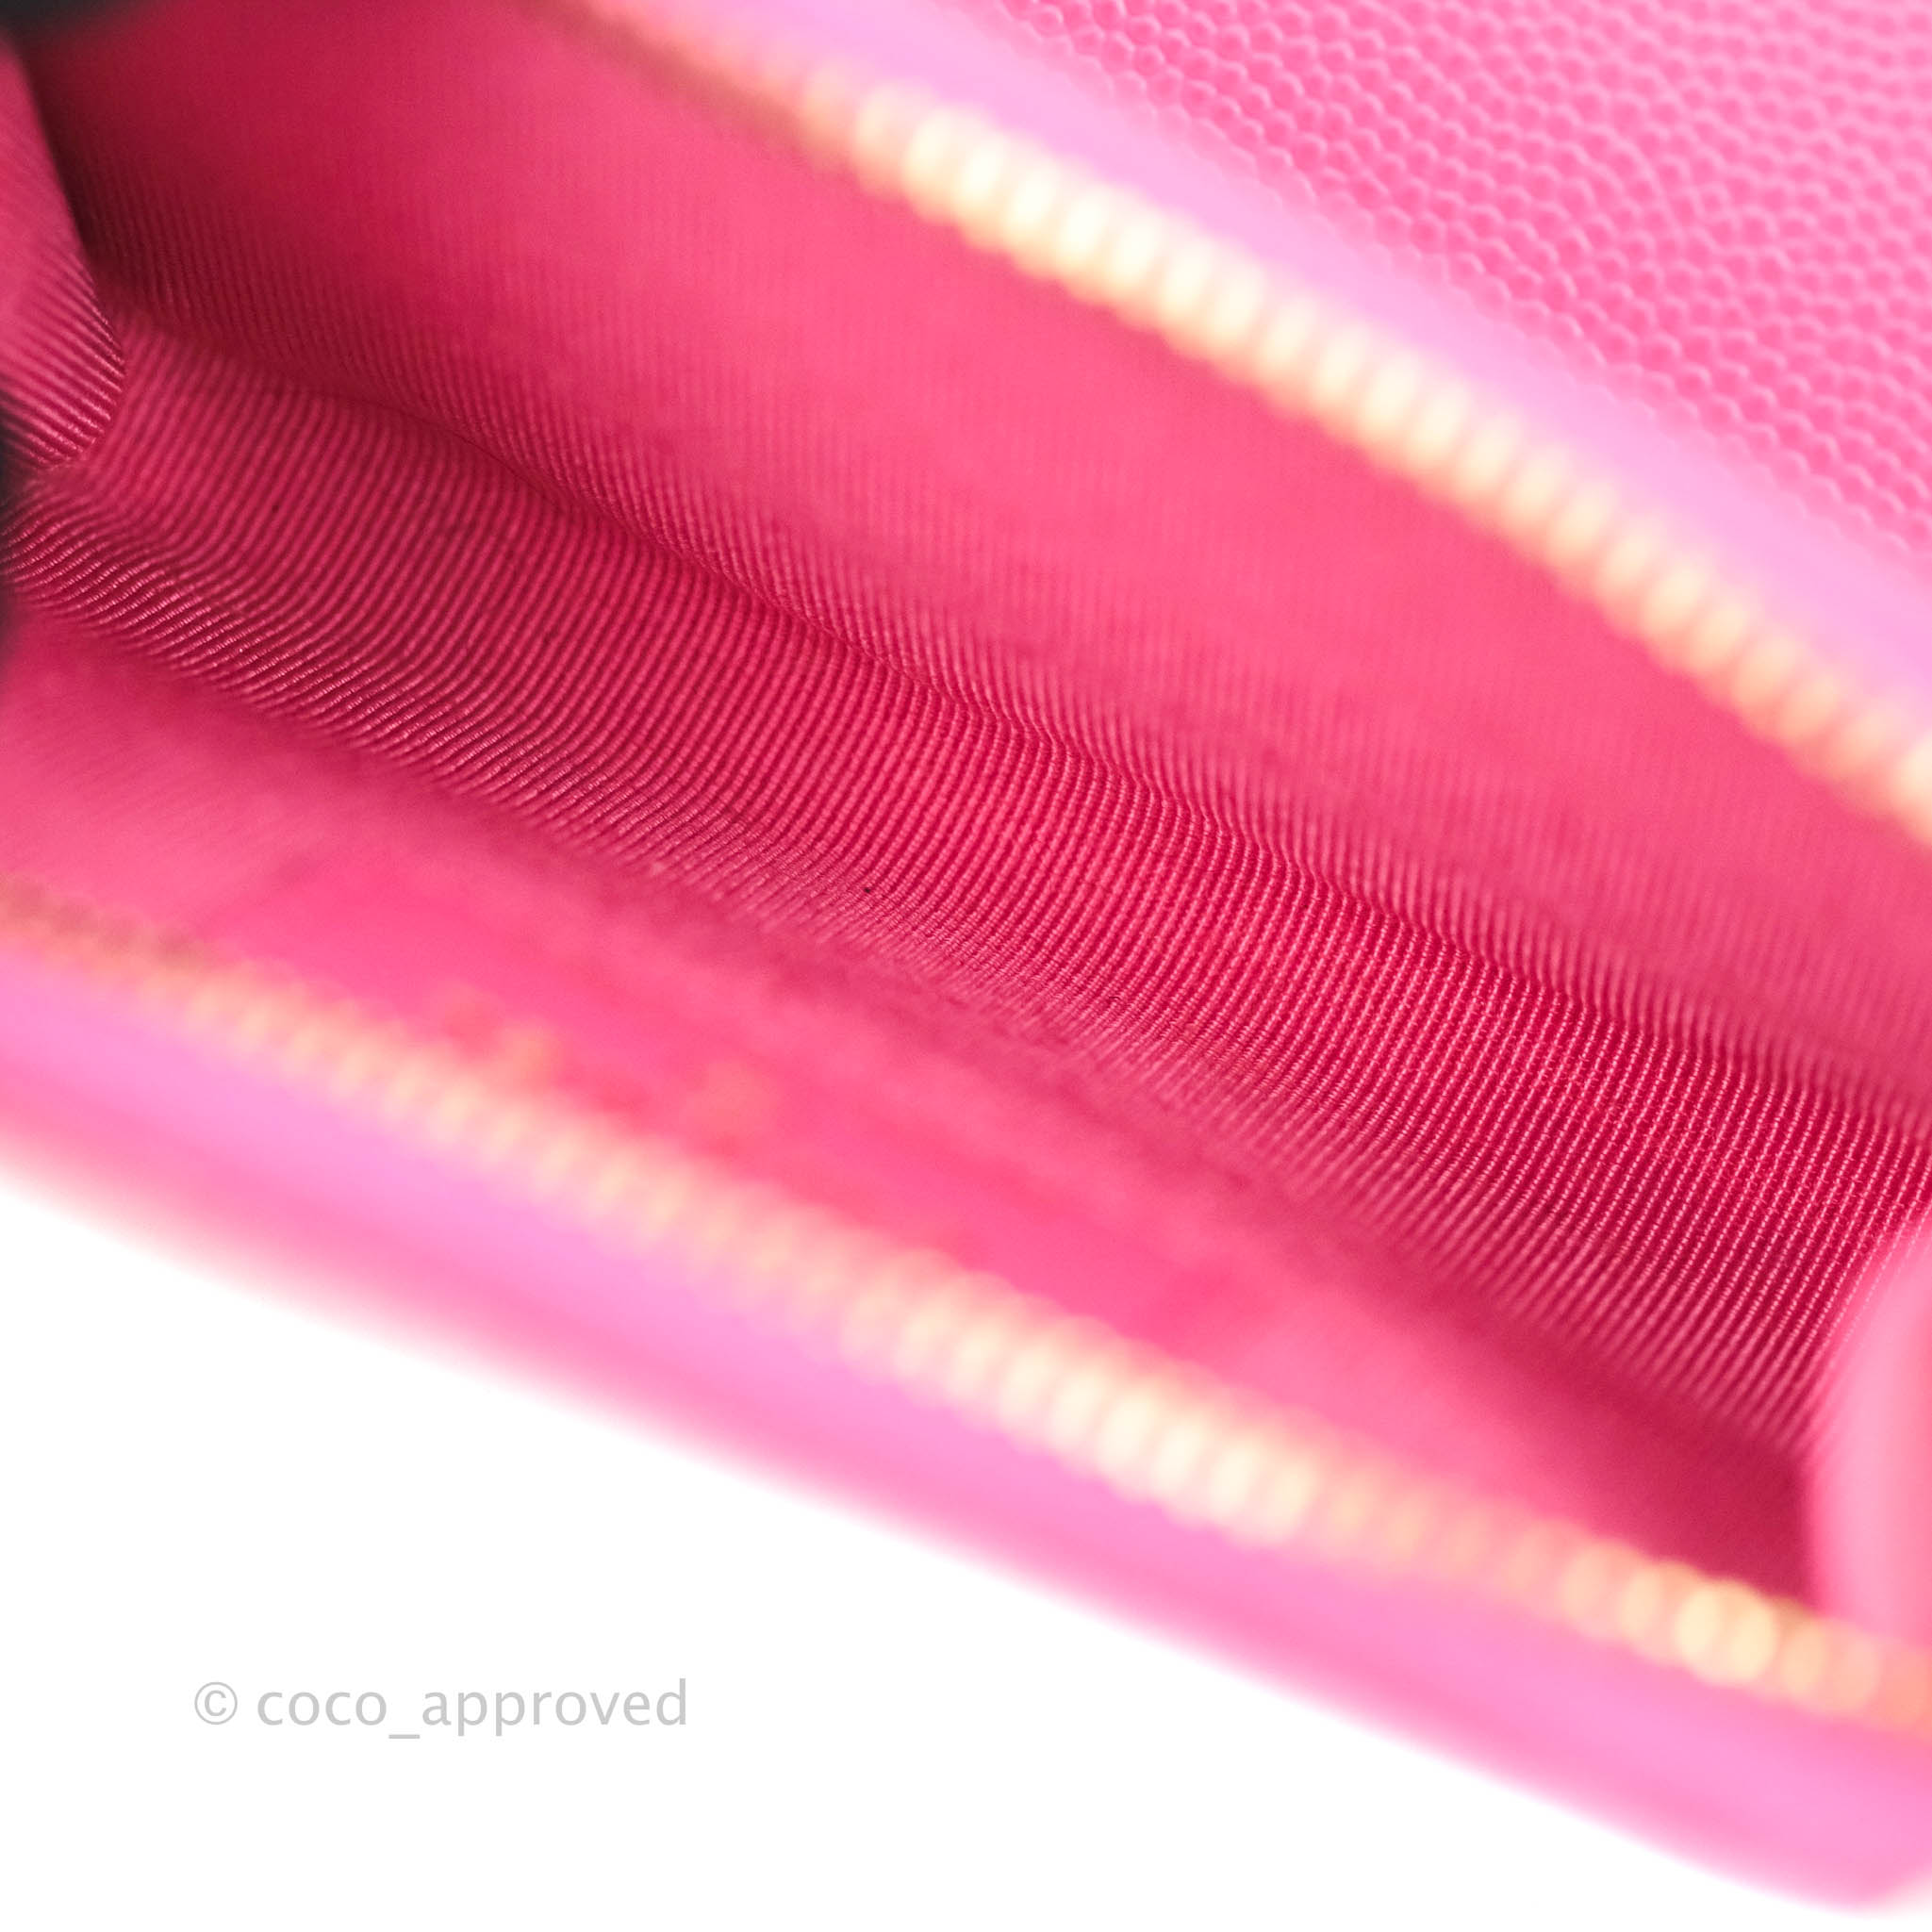 Louis Vuitton Zipped Coin Card Holder Wallet in Fuchsia Pink